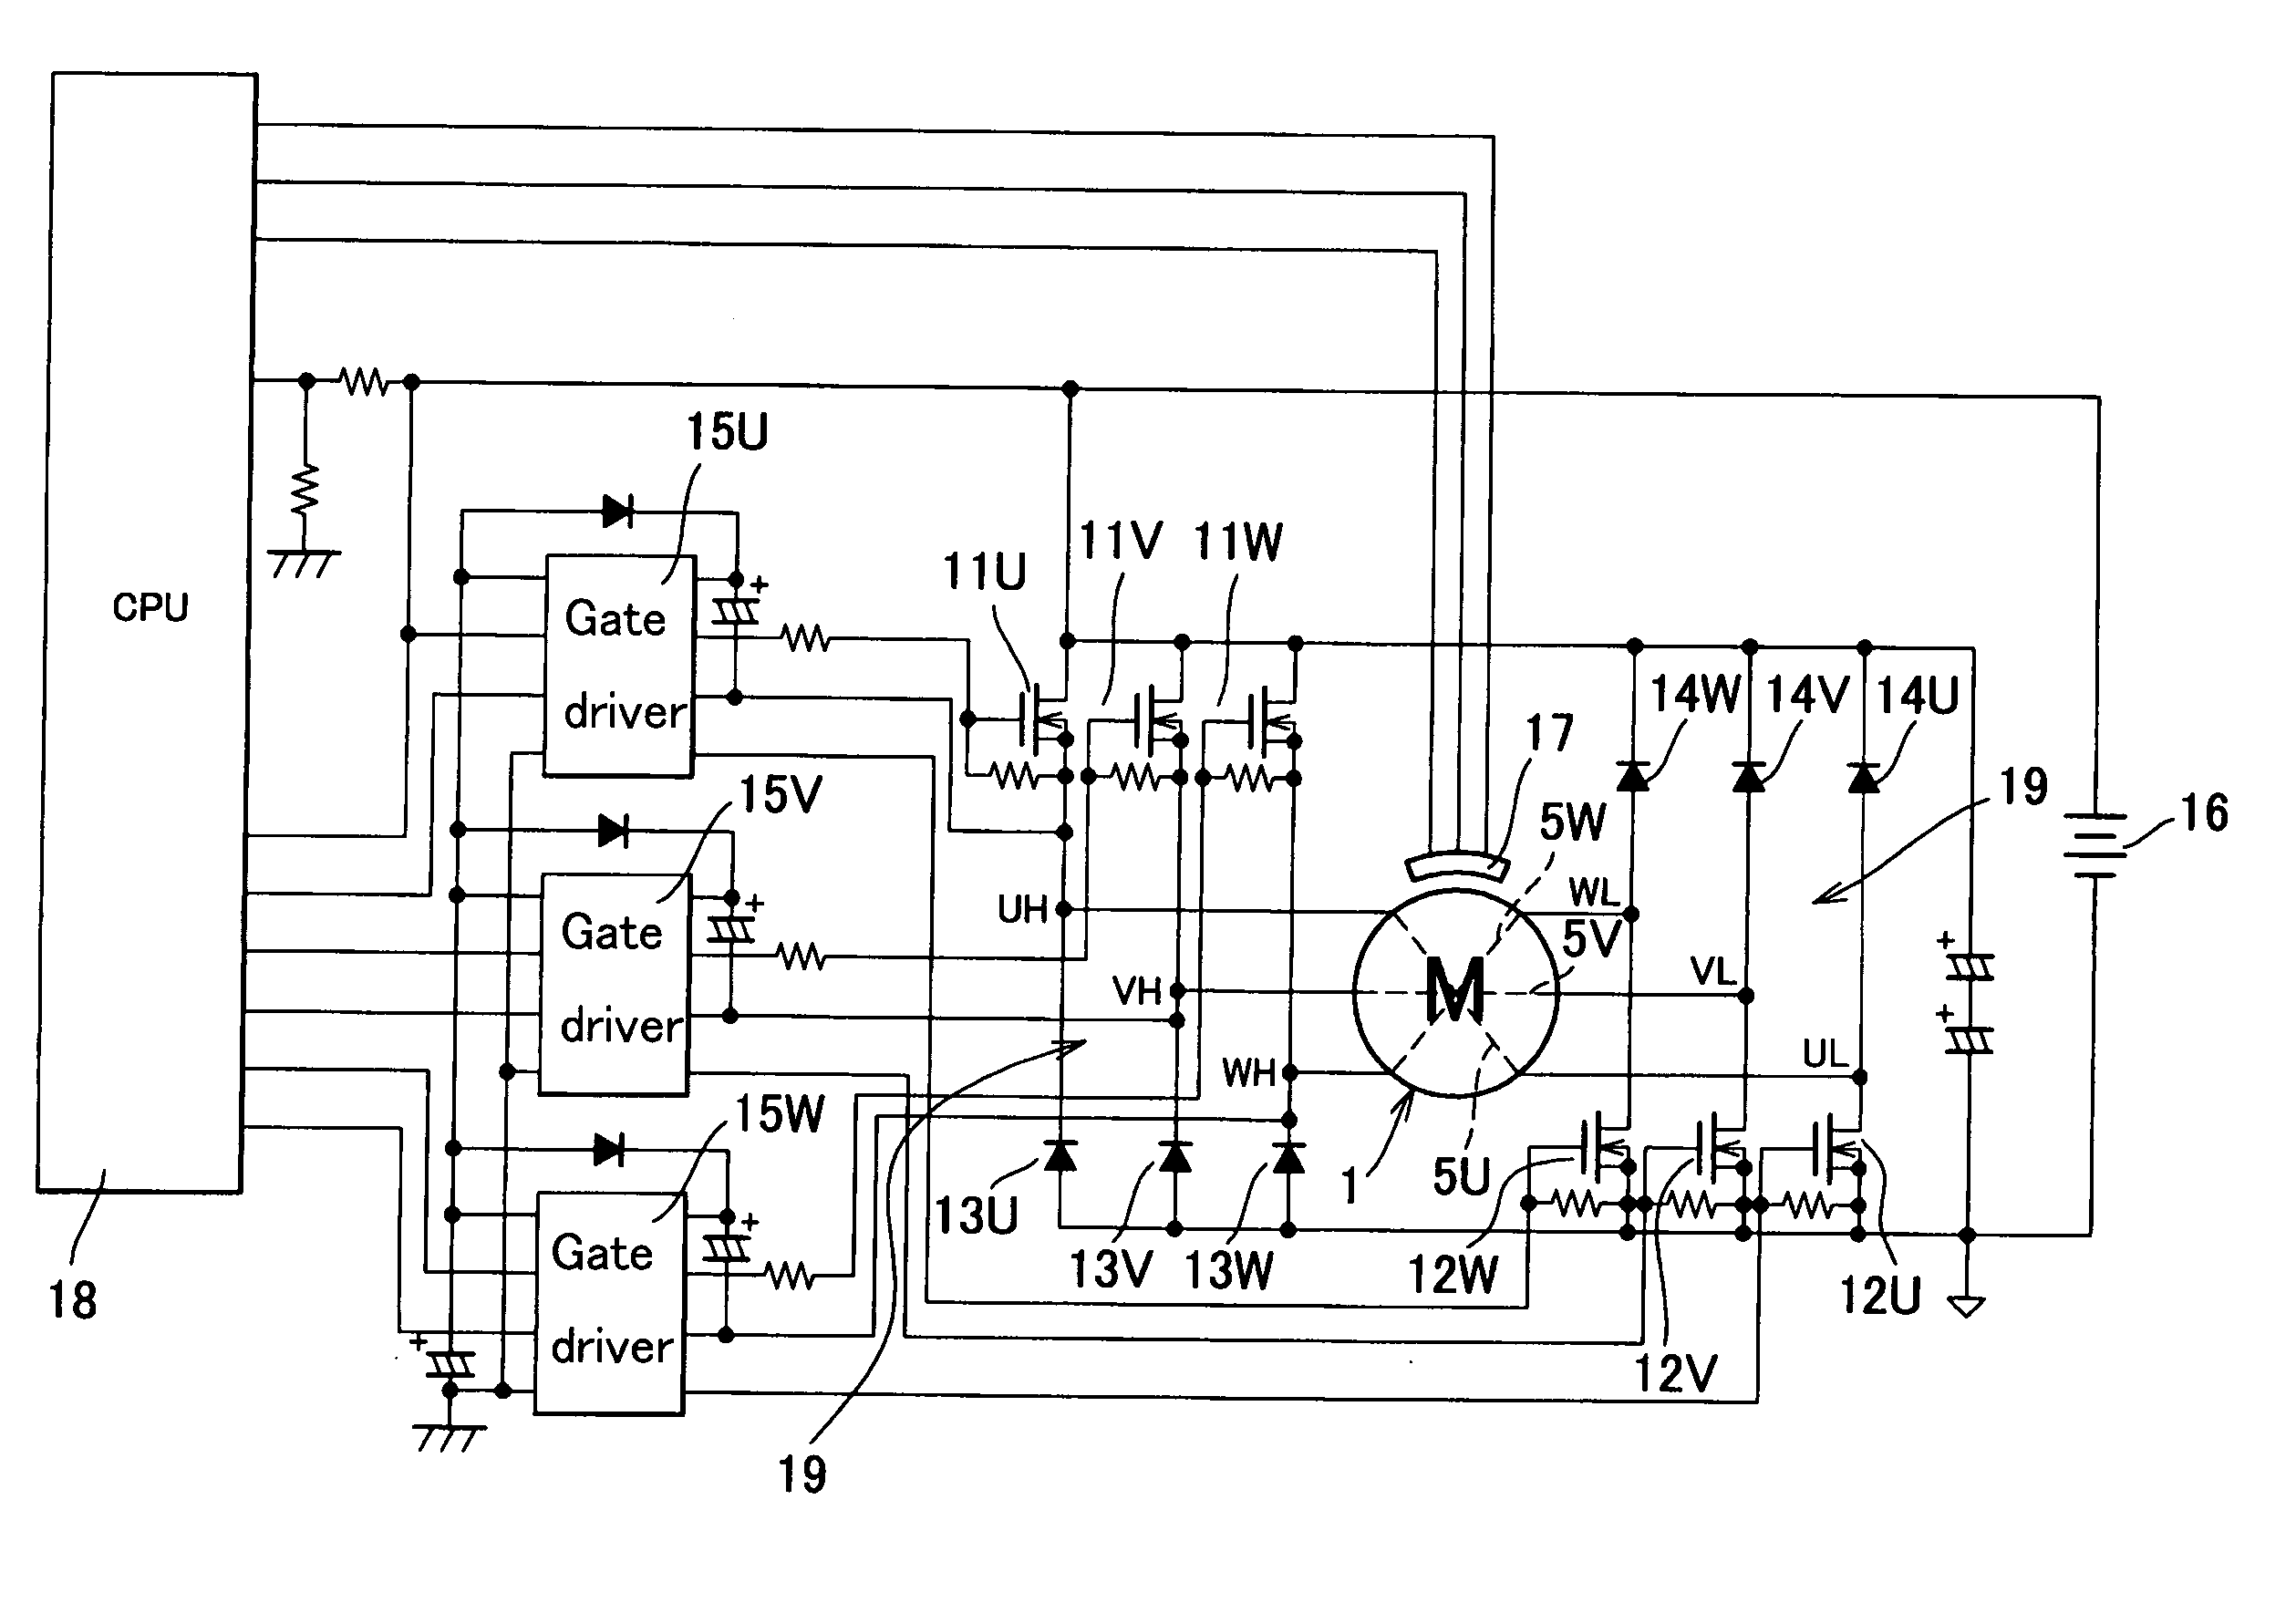 Control method of generator